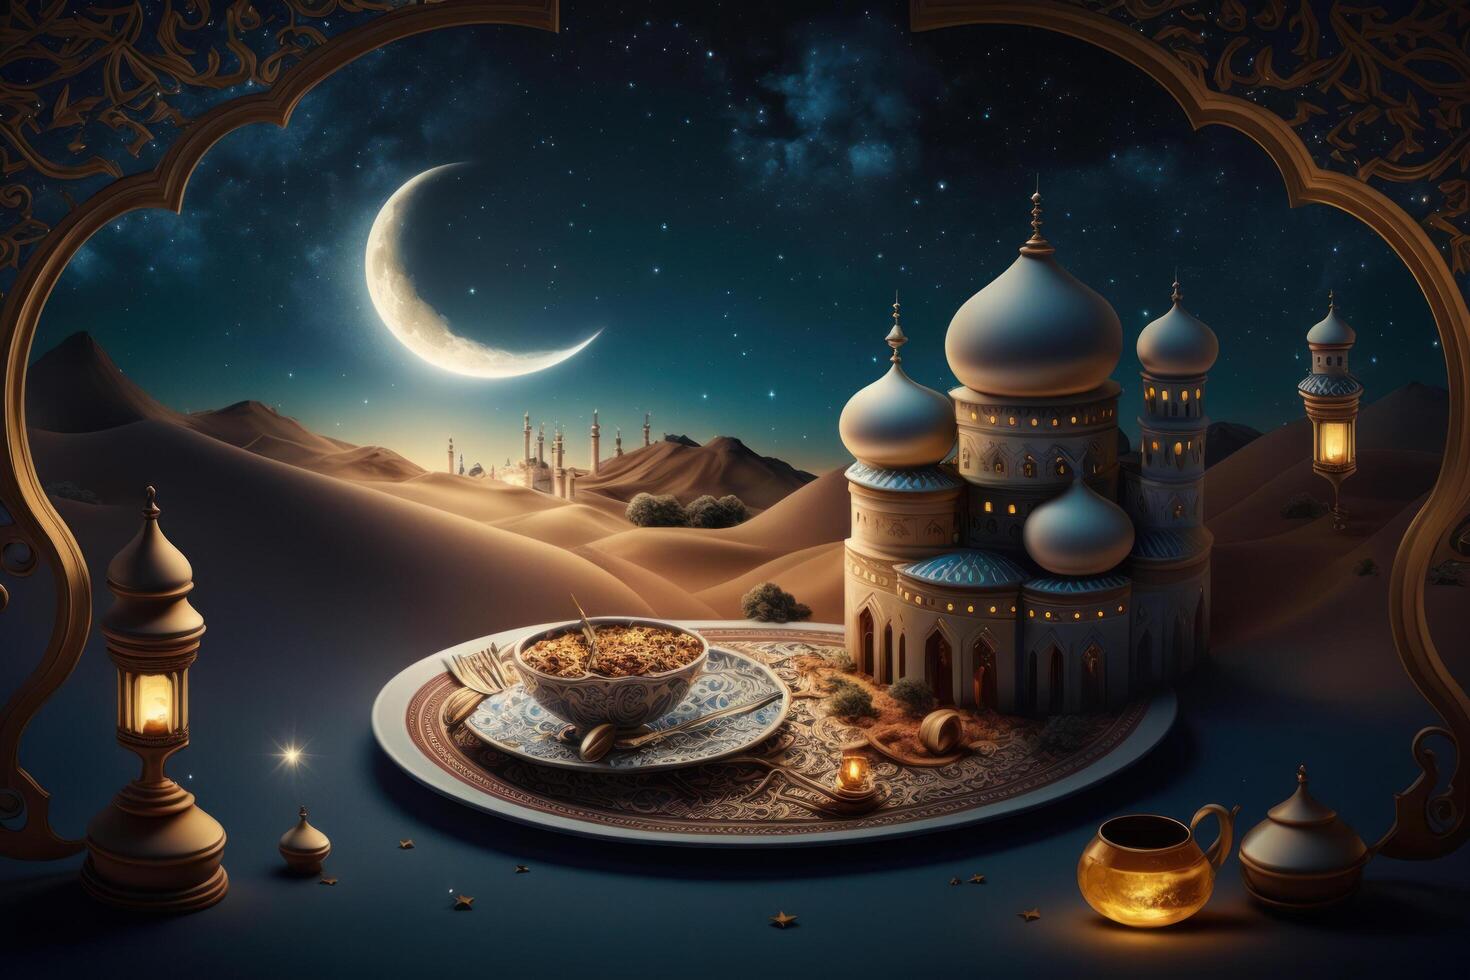 Festive photo ramadan kareem background. Illustration